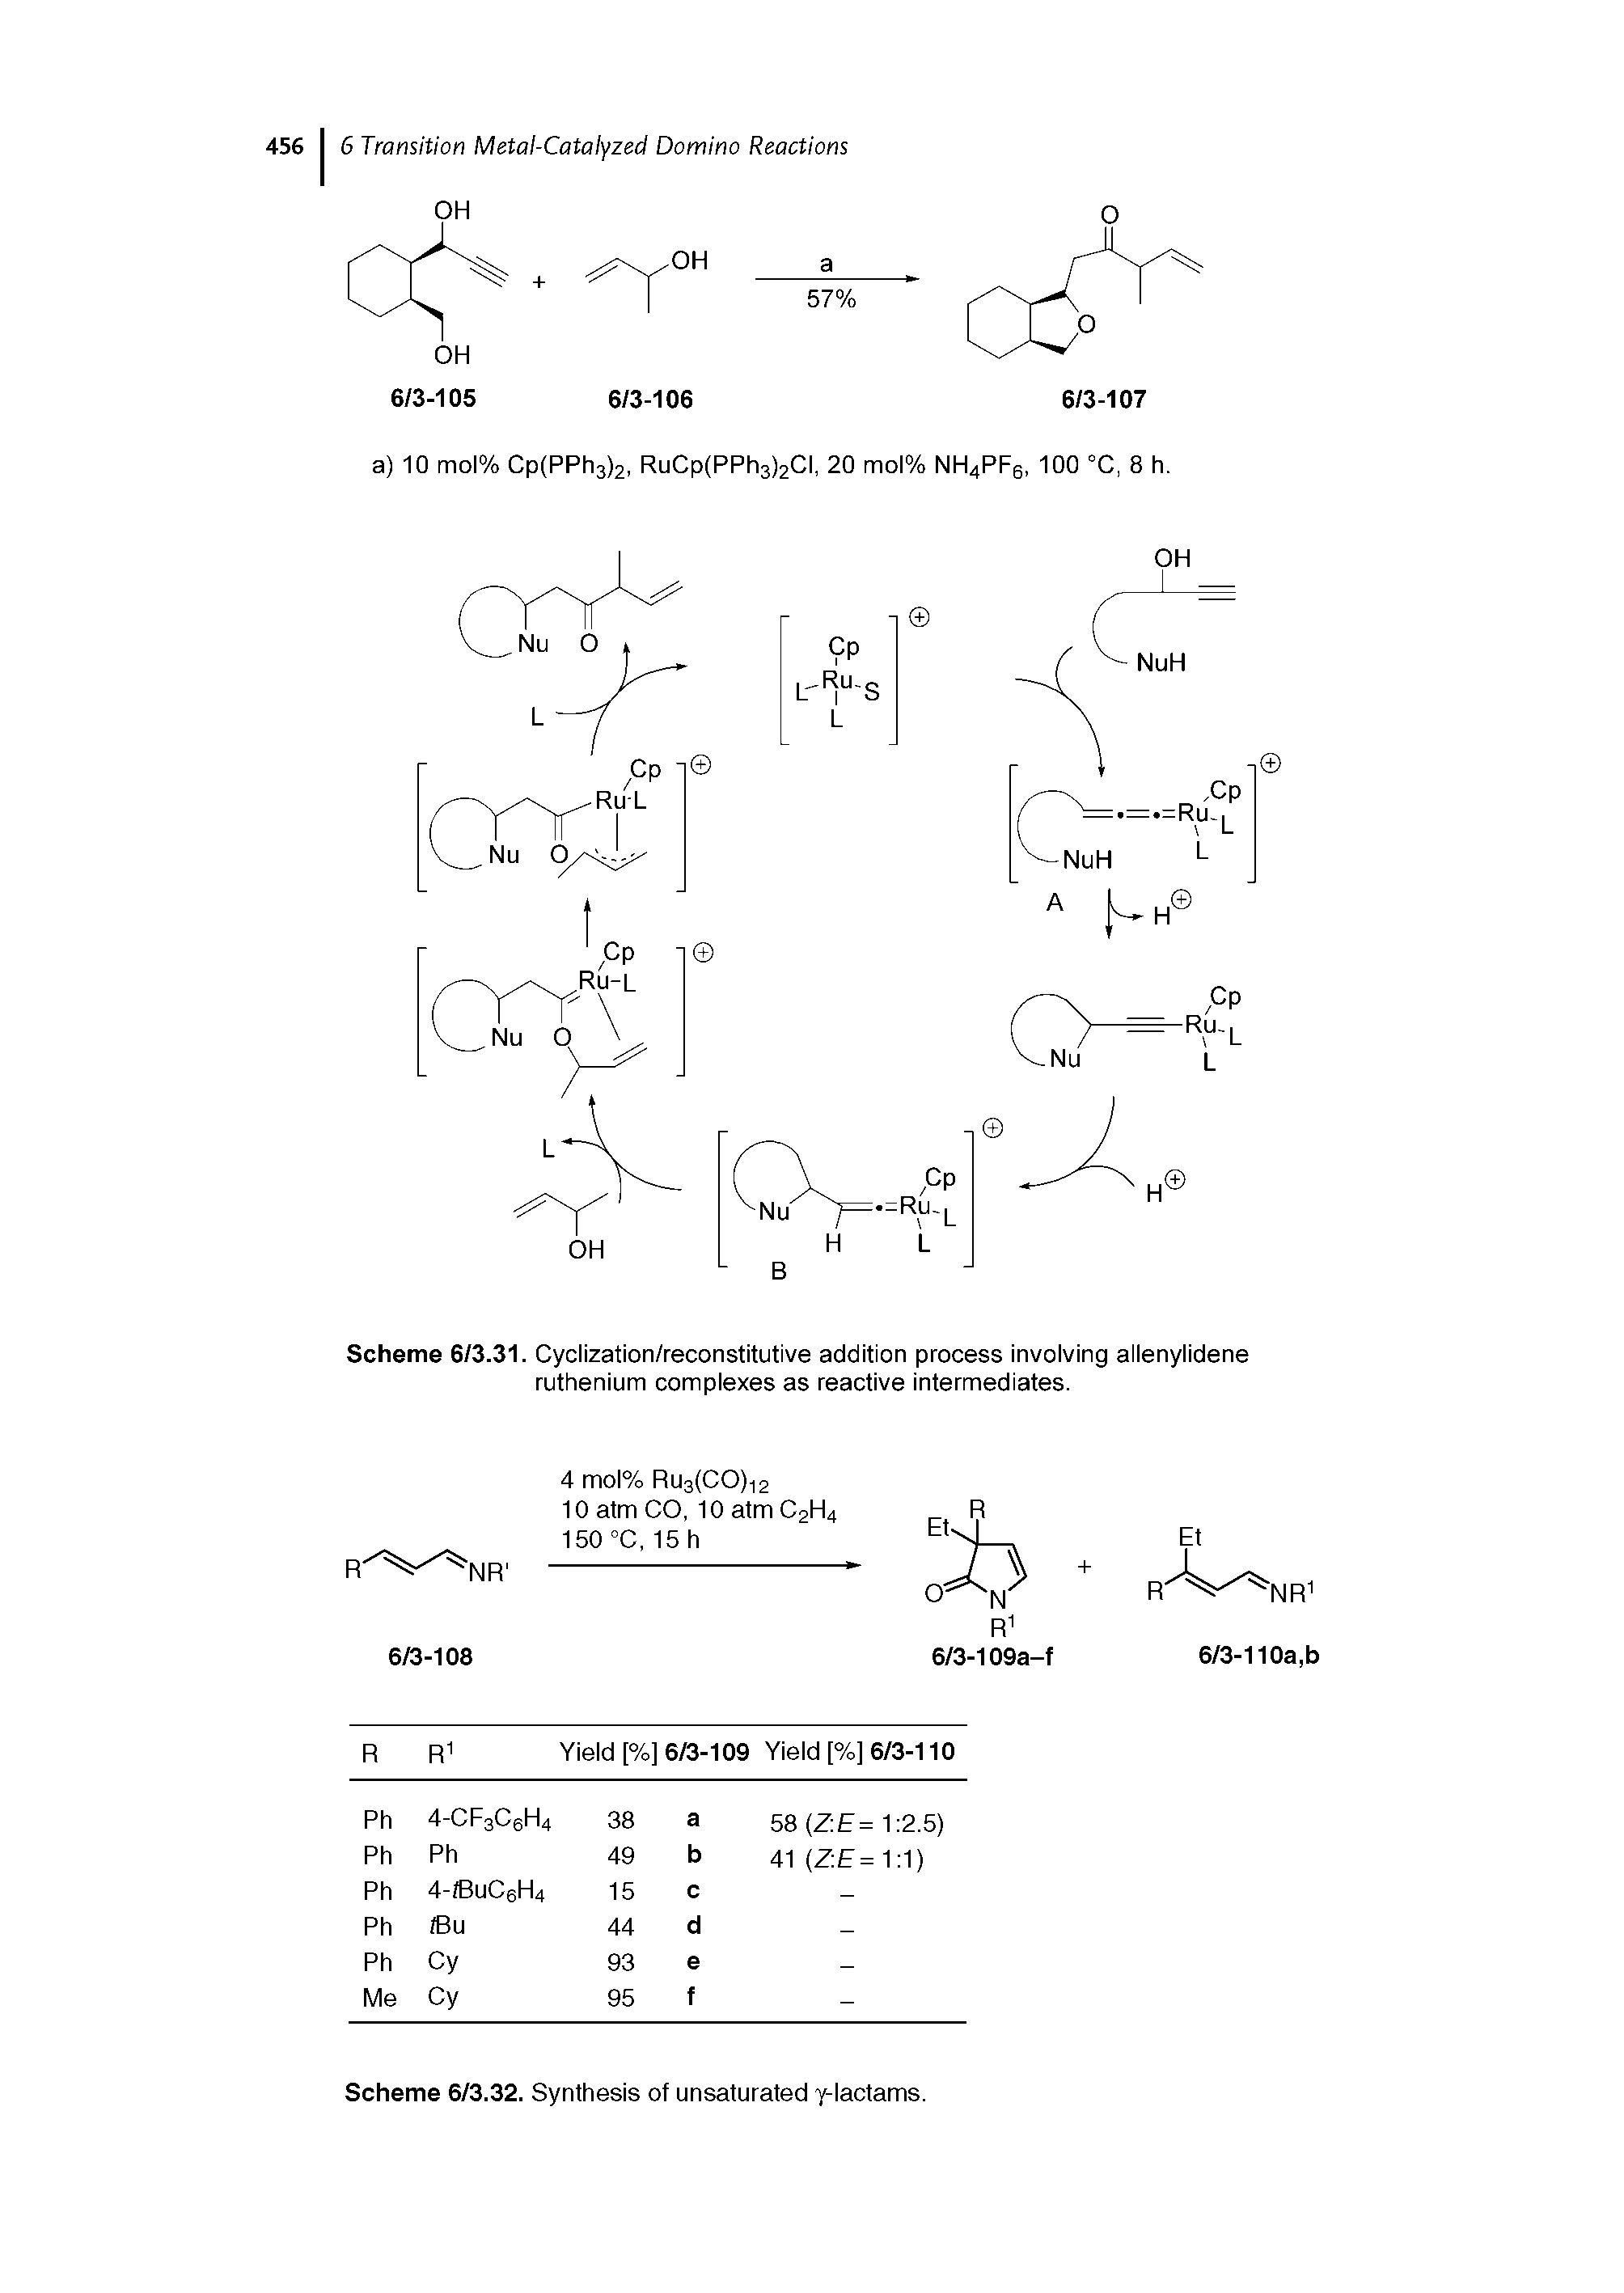 Scheme 6/3.31. Cyclization/reconstitutive addition process involving allenylidene ruthenium complexes as reactive intermediates.